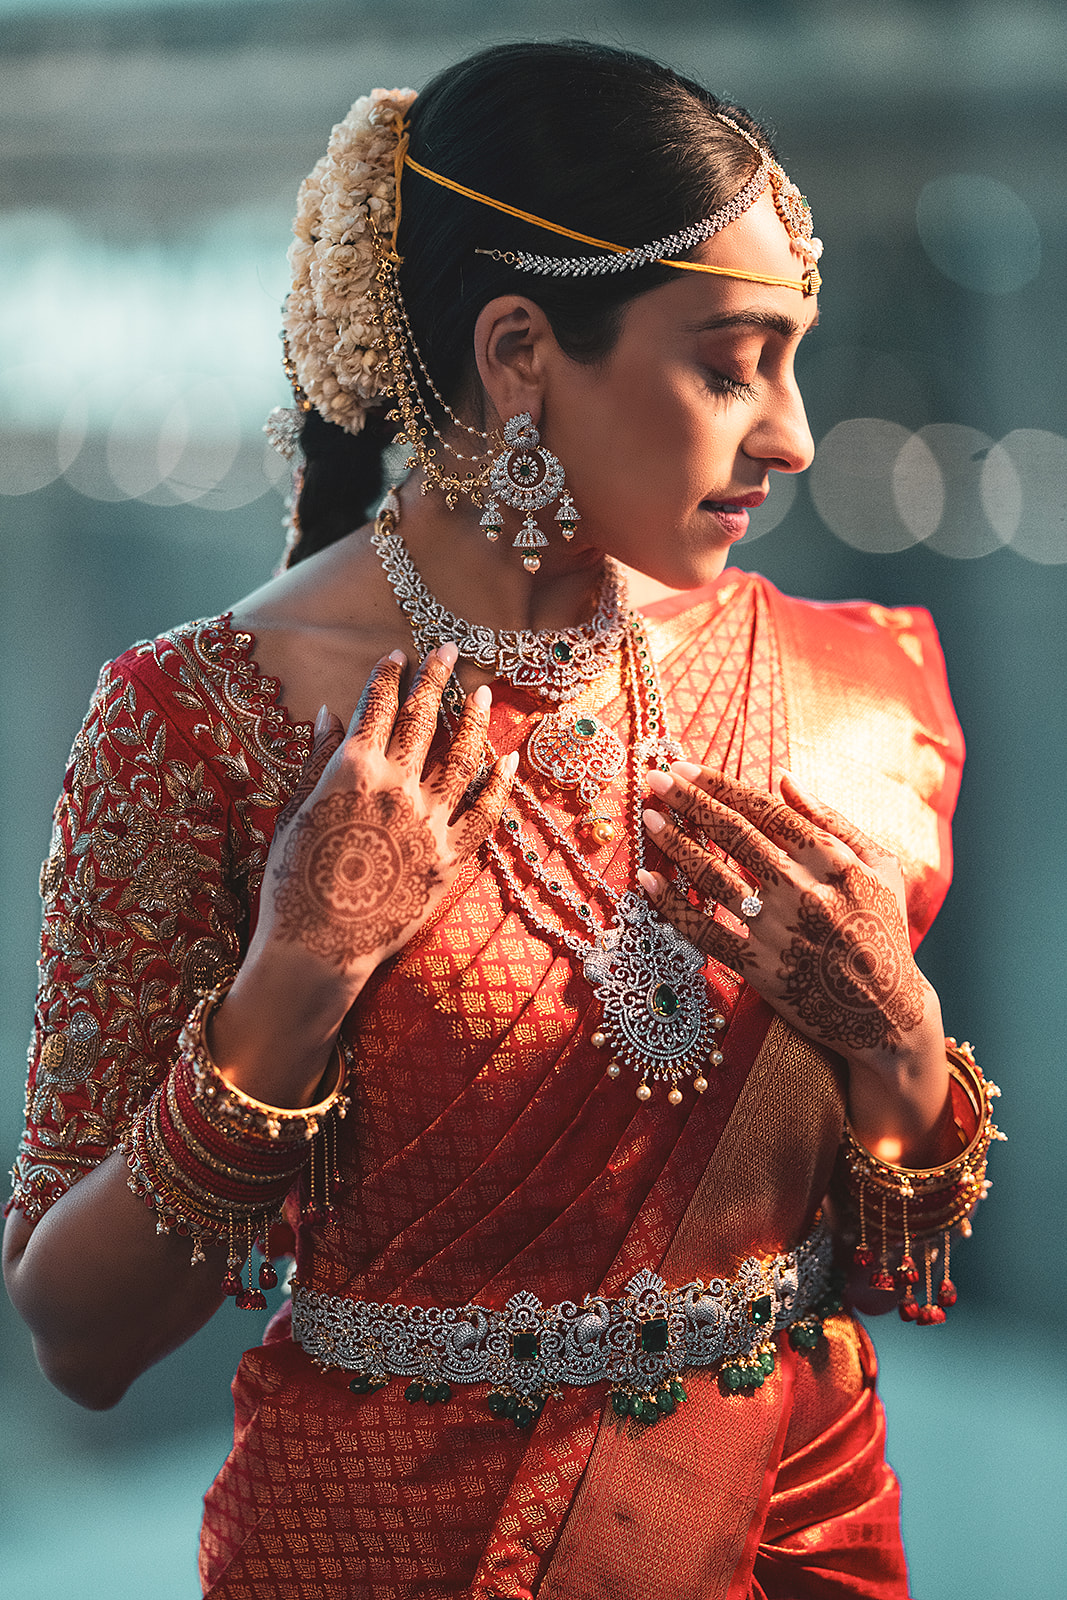 South Indian wedding bridal hair and makeup